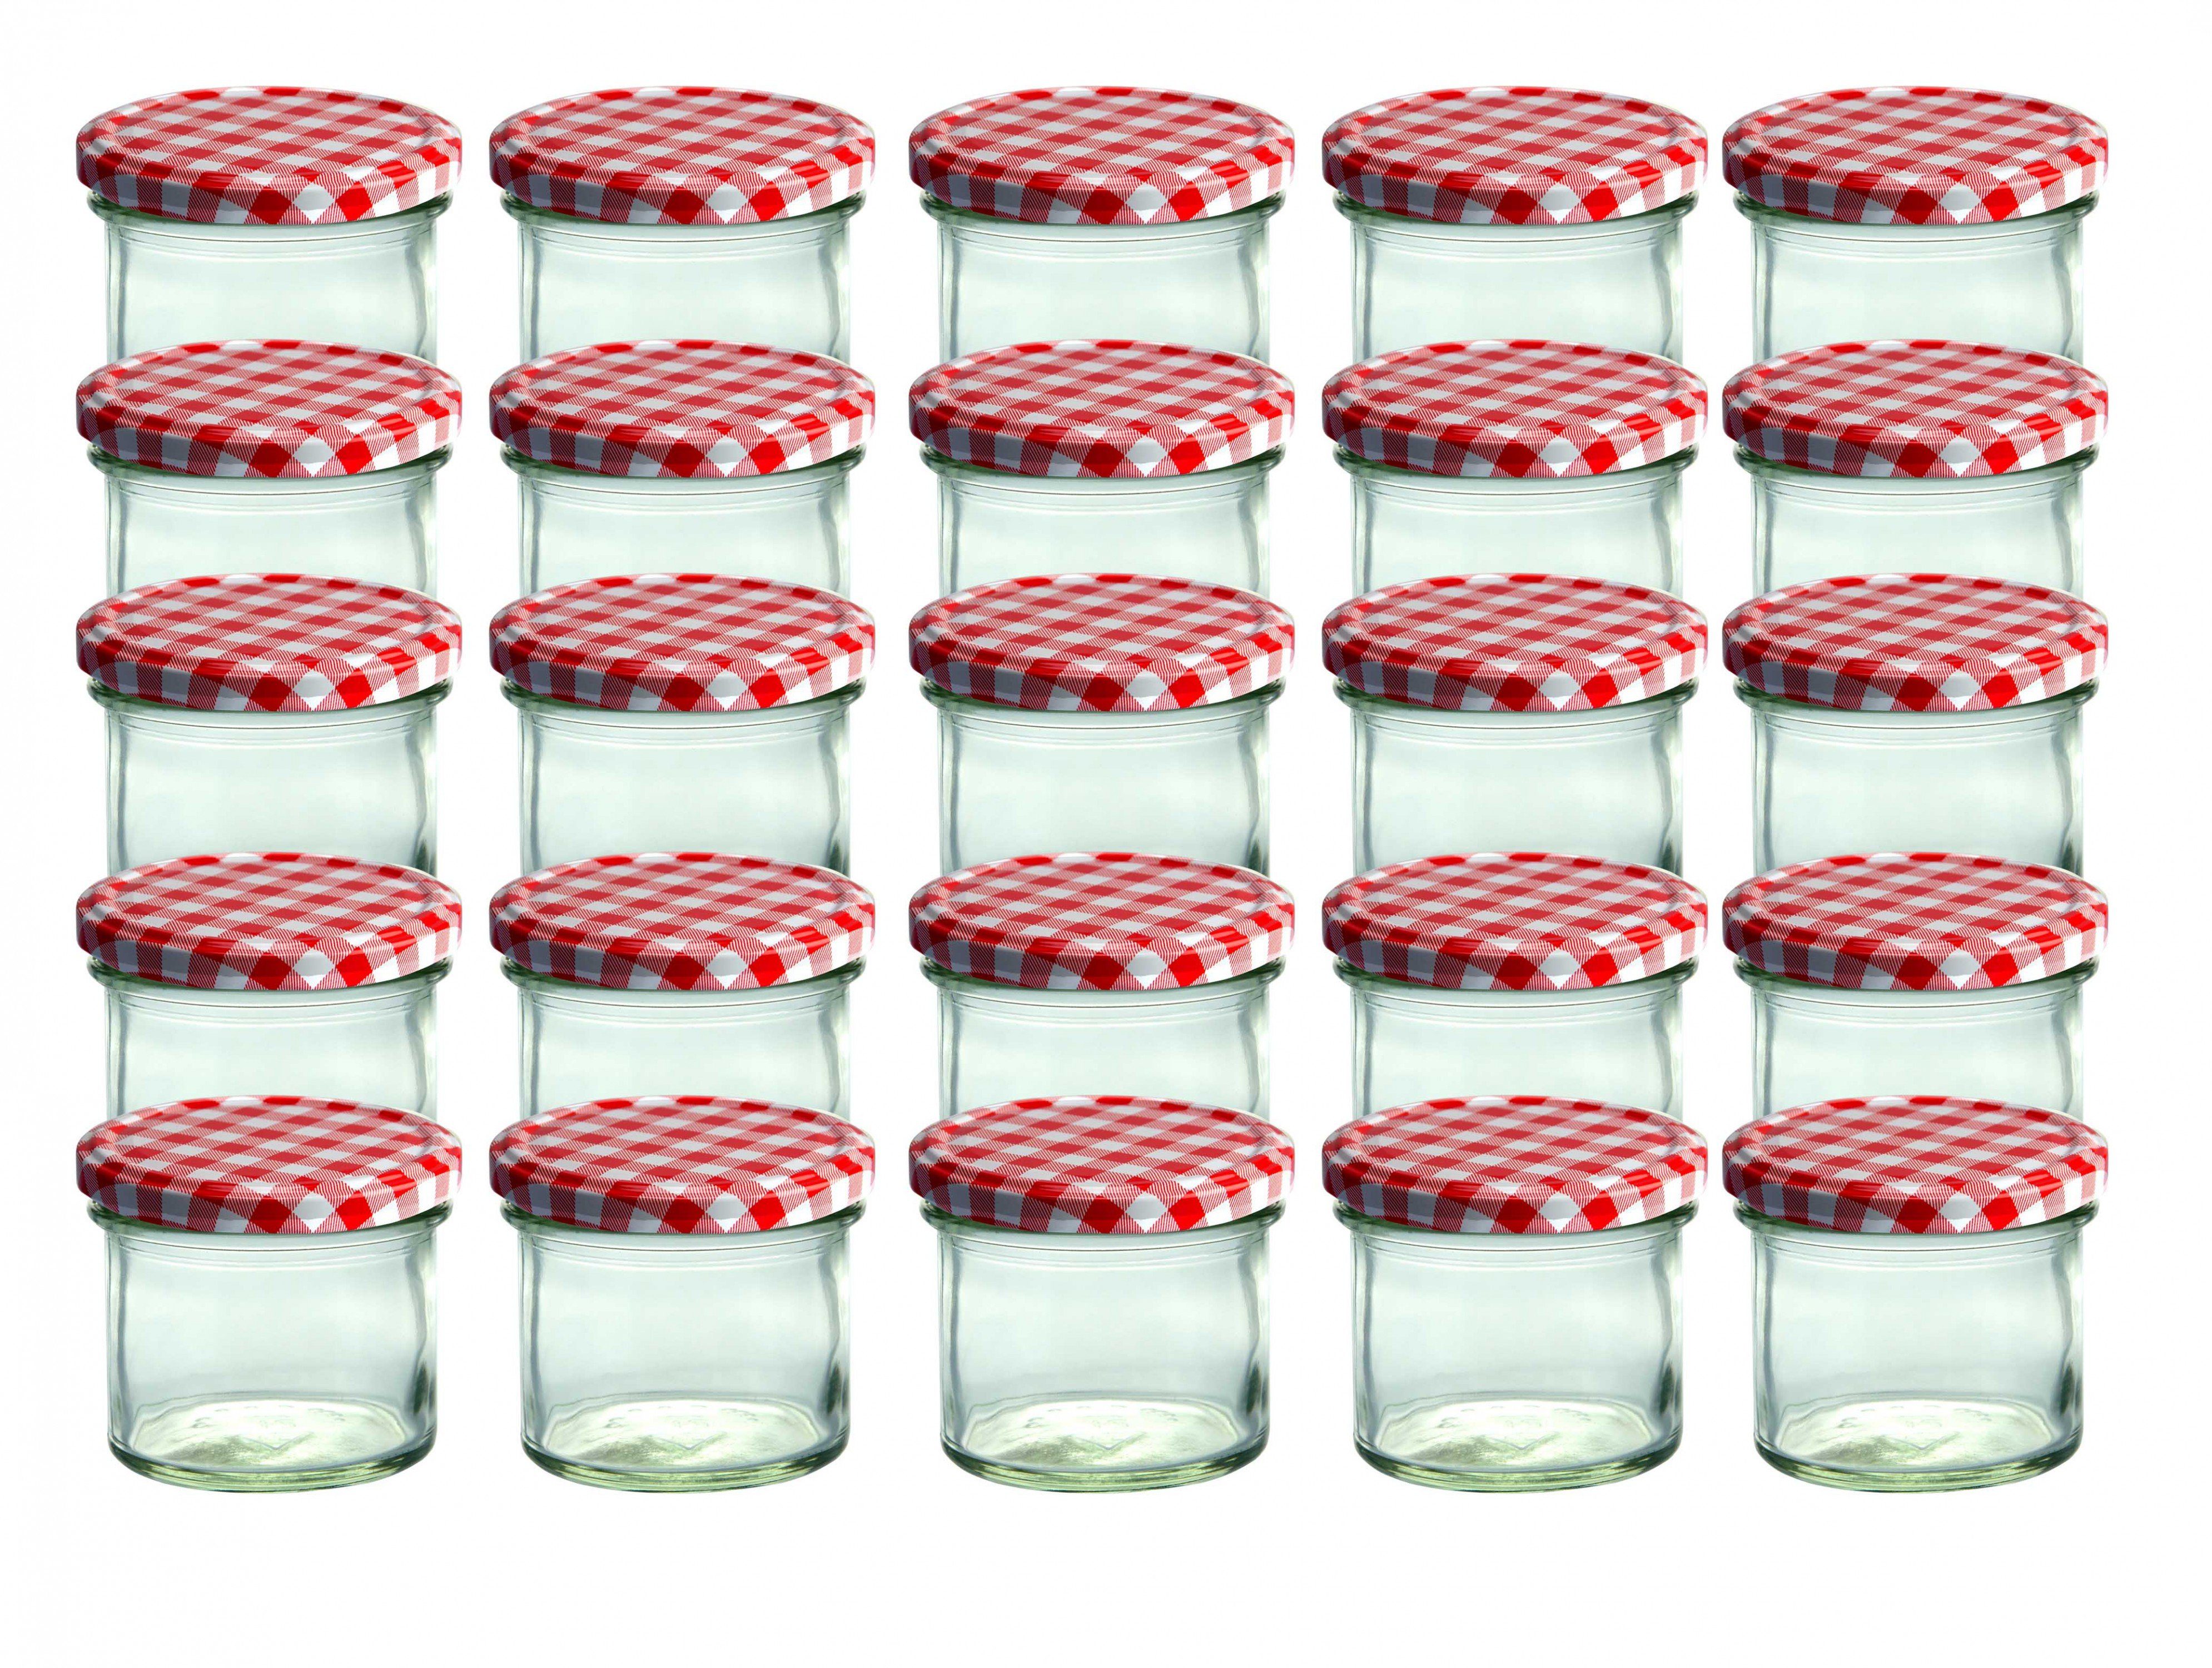 MamboCat Einmachglas CAPCRO 25er Set Sturzglas 125 ml Marmeladenglas rot karierter Deckel, Glas